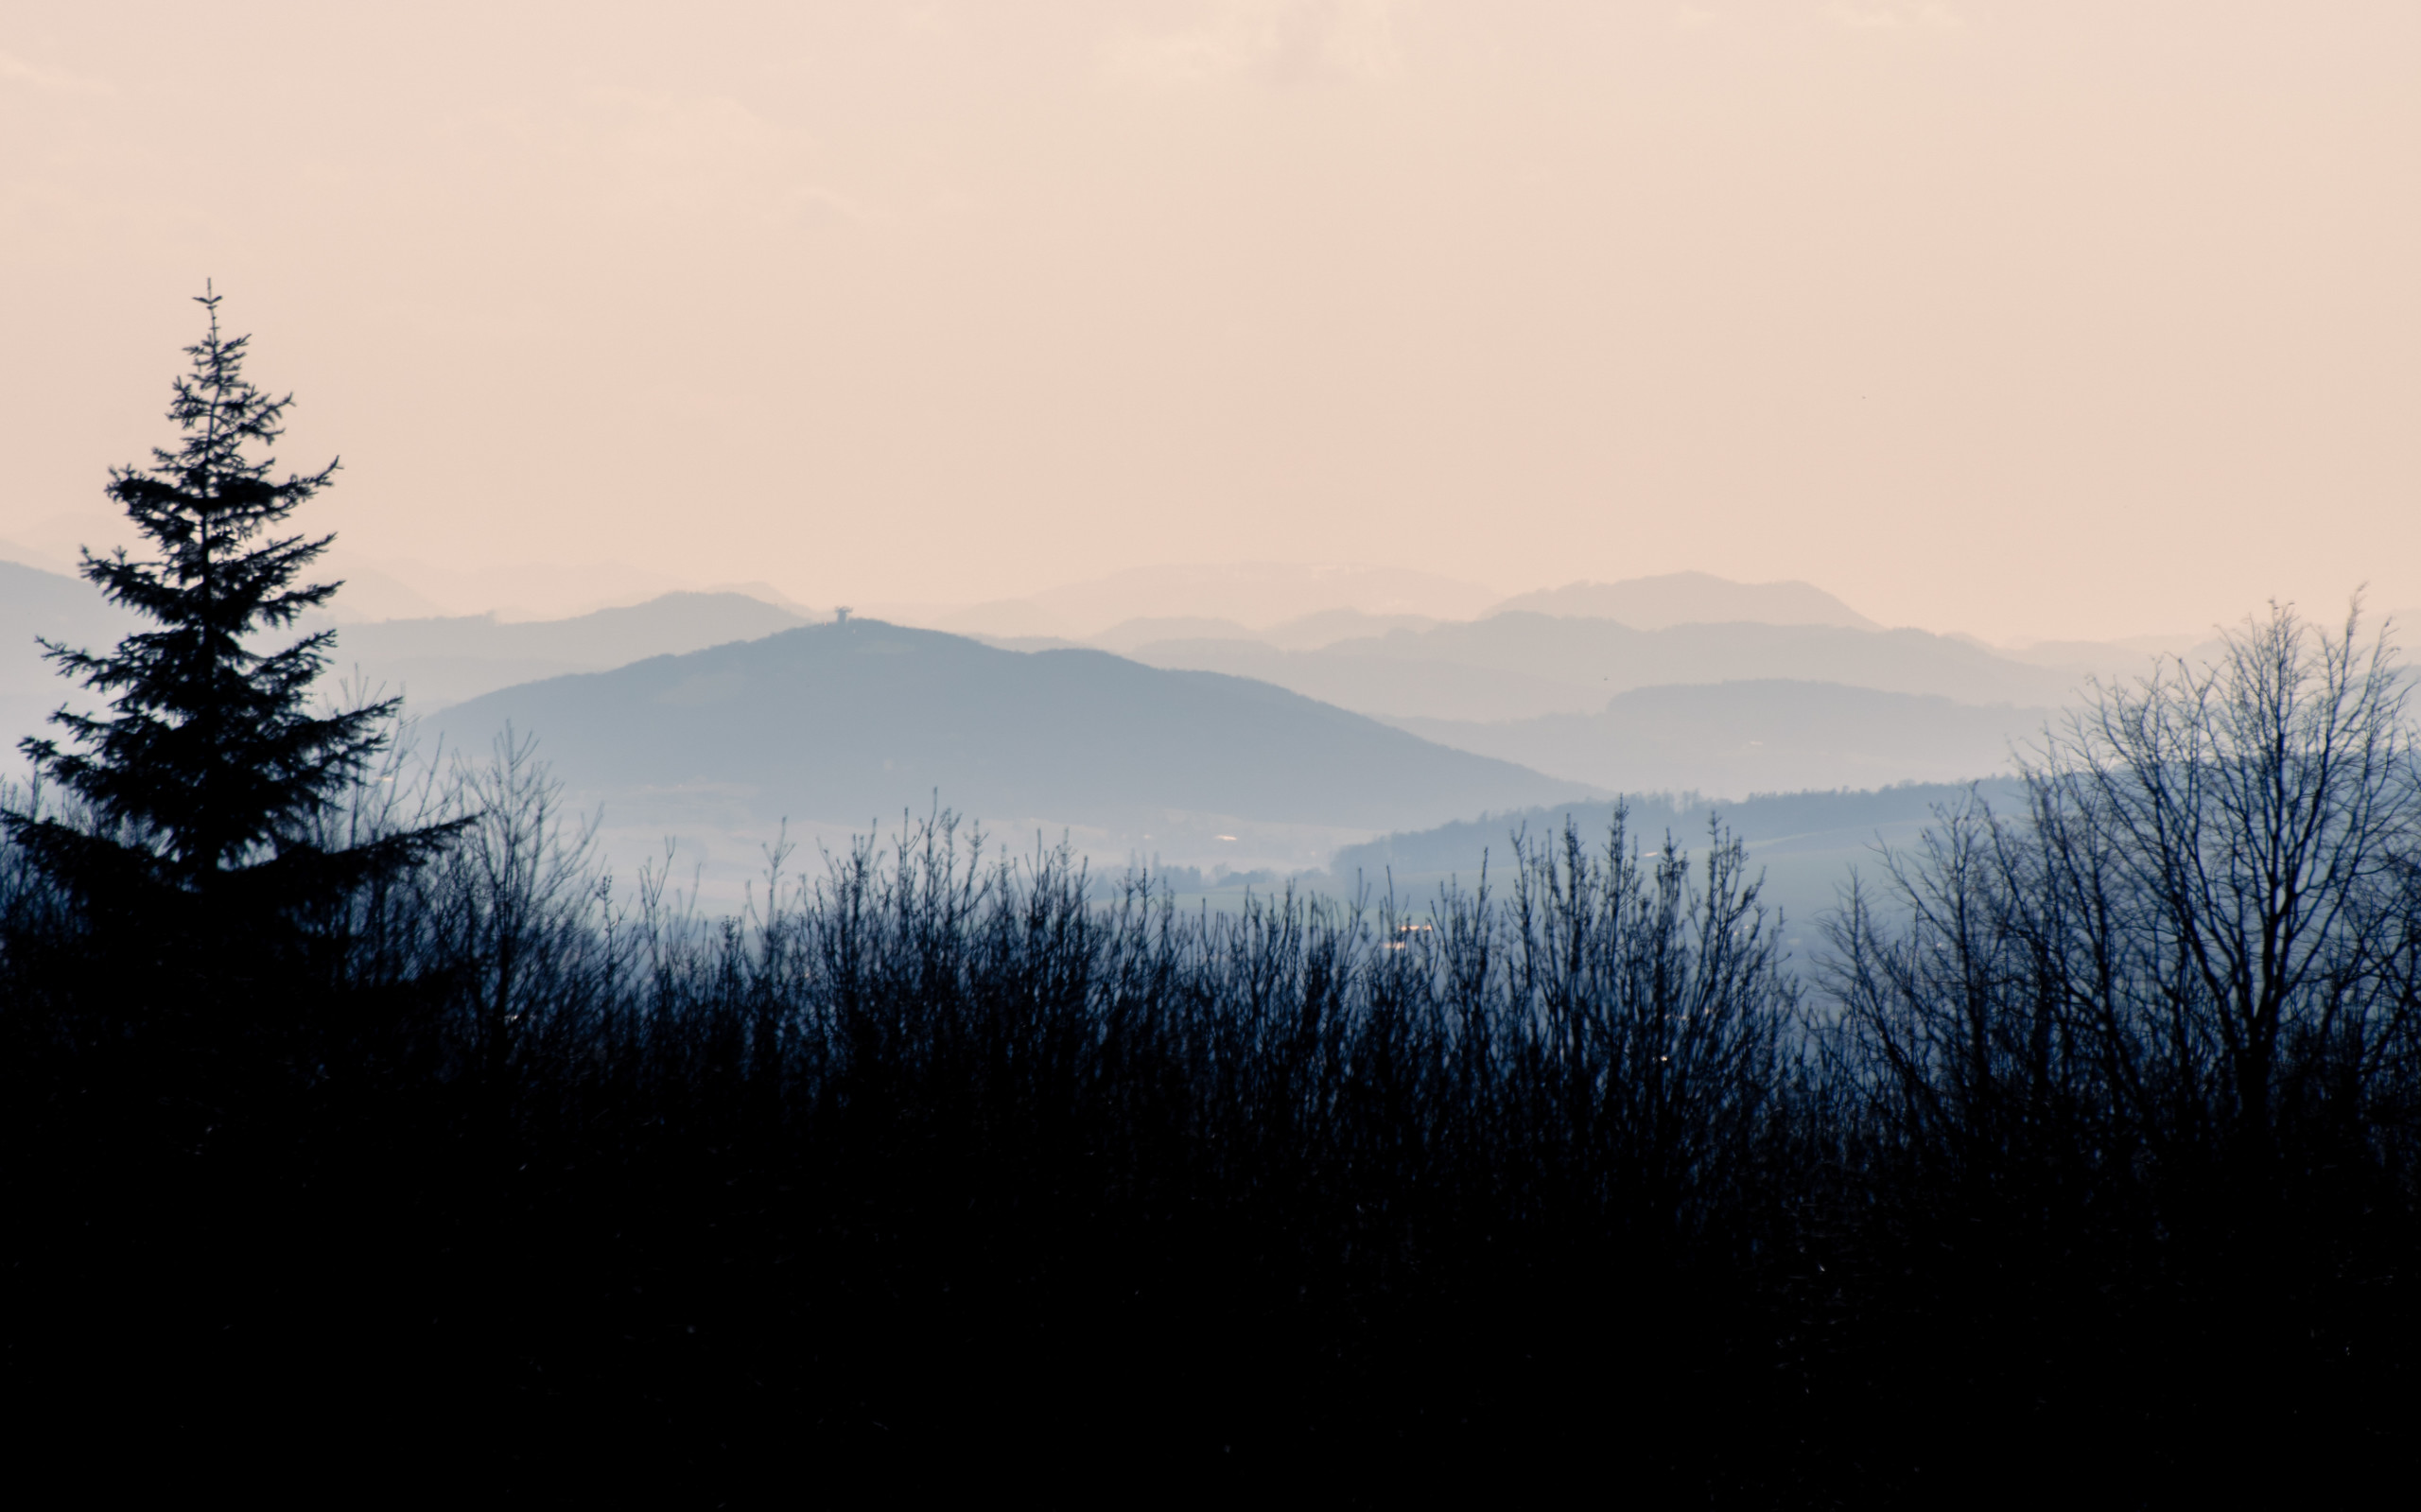 Misty view across the Wienerwald from near Maria gugging. Photo by Tom Minchington